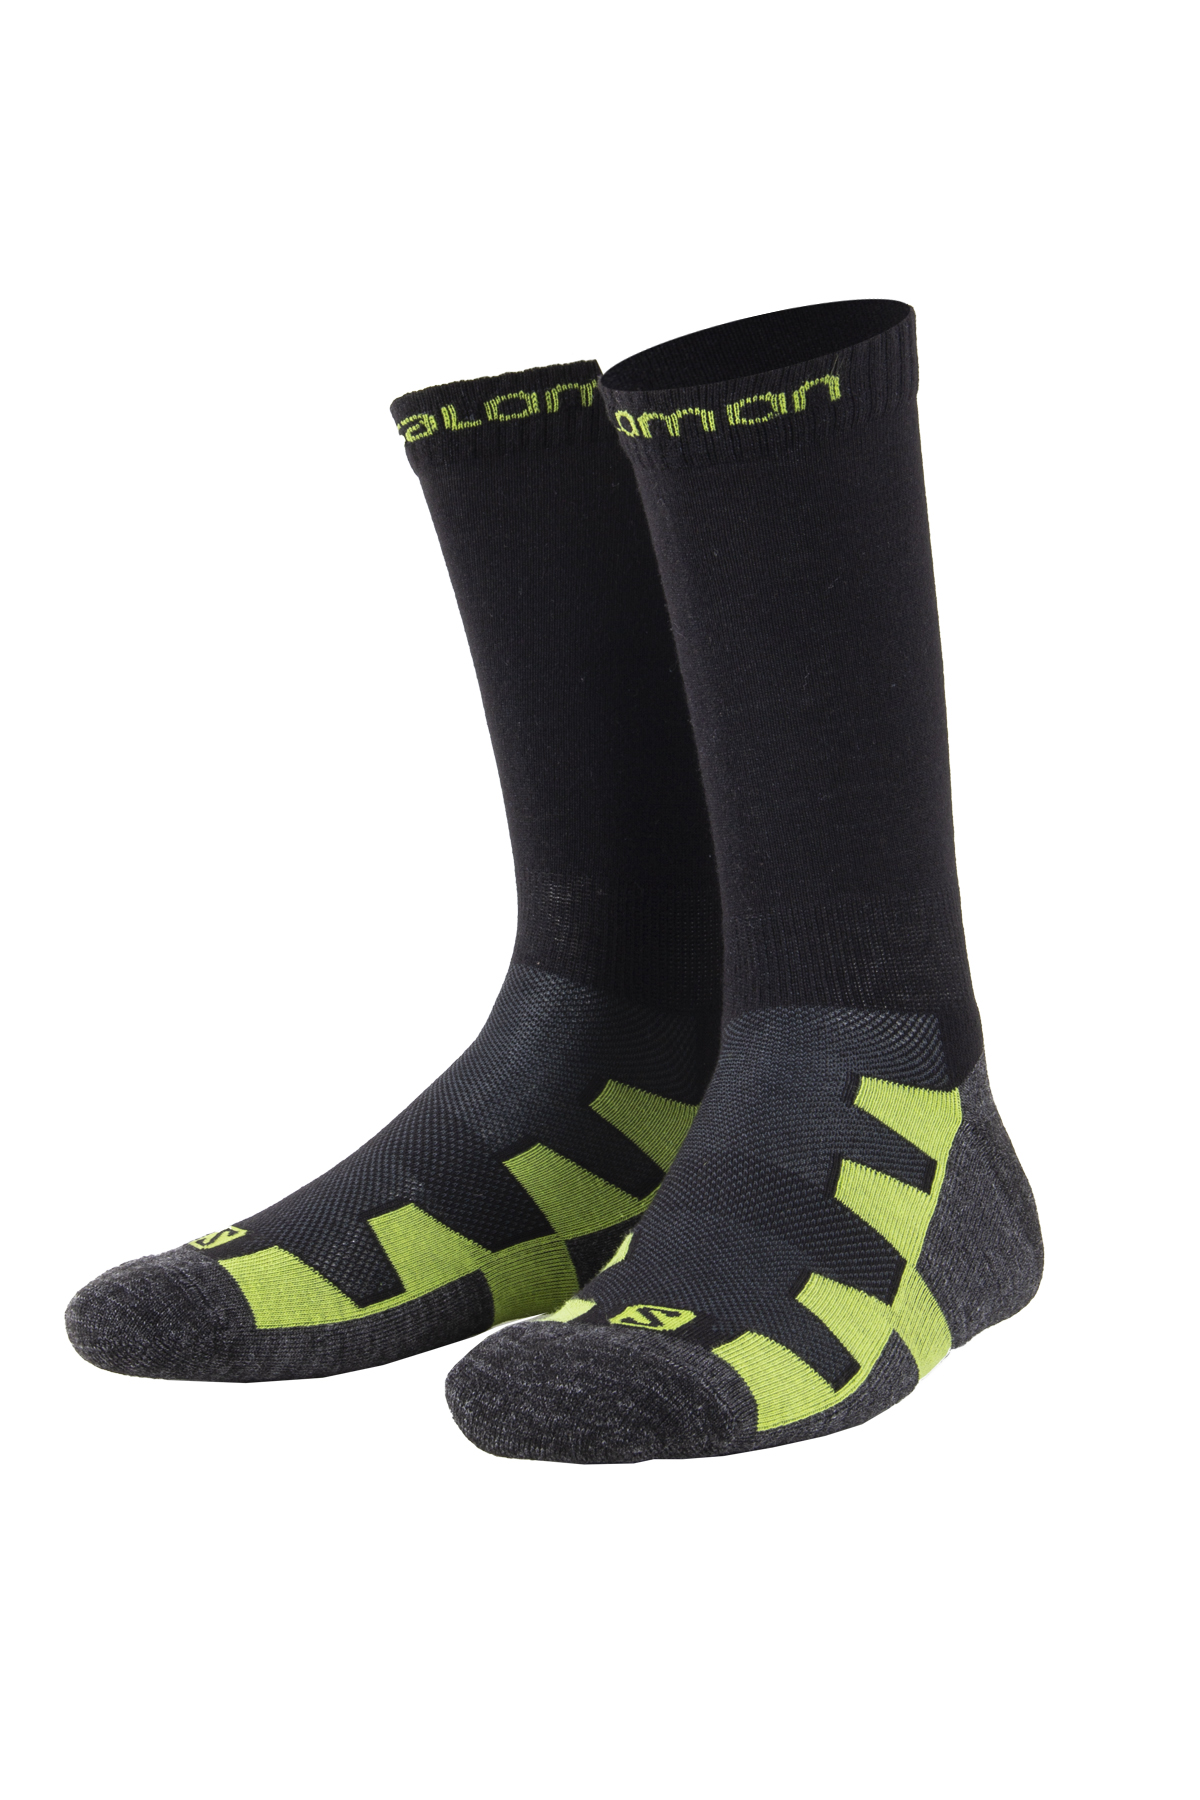 Salomon LC1218227 - Shorty Running Siyah-Yeşil Outdoor Çorap